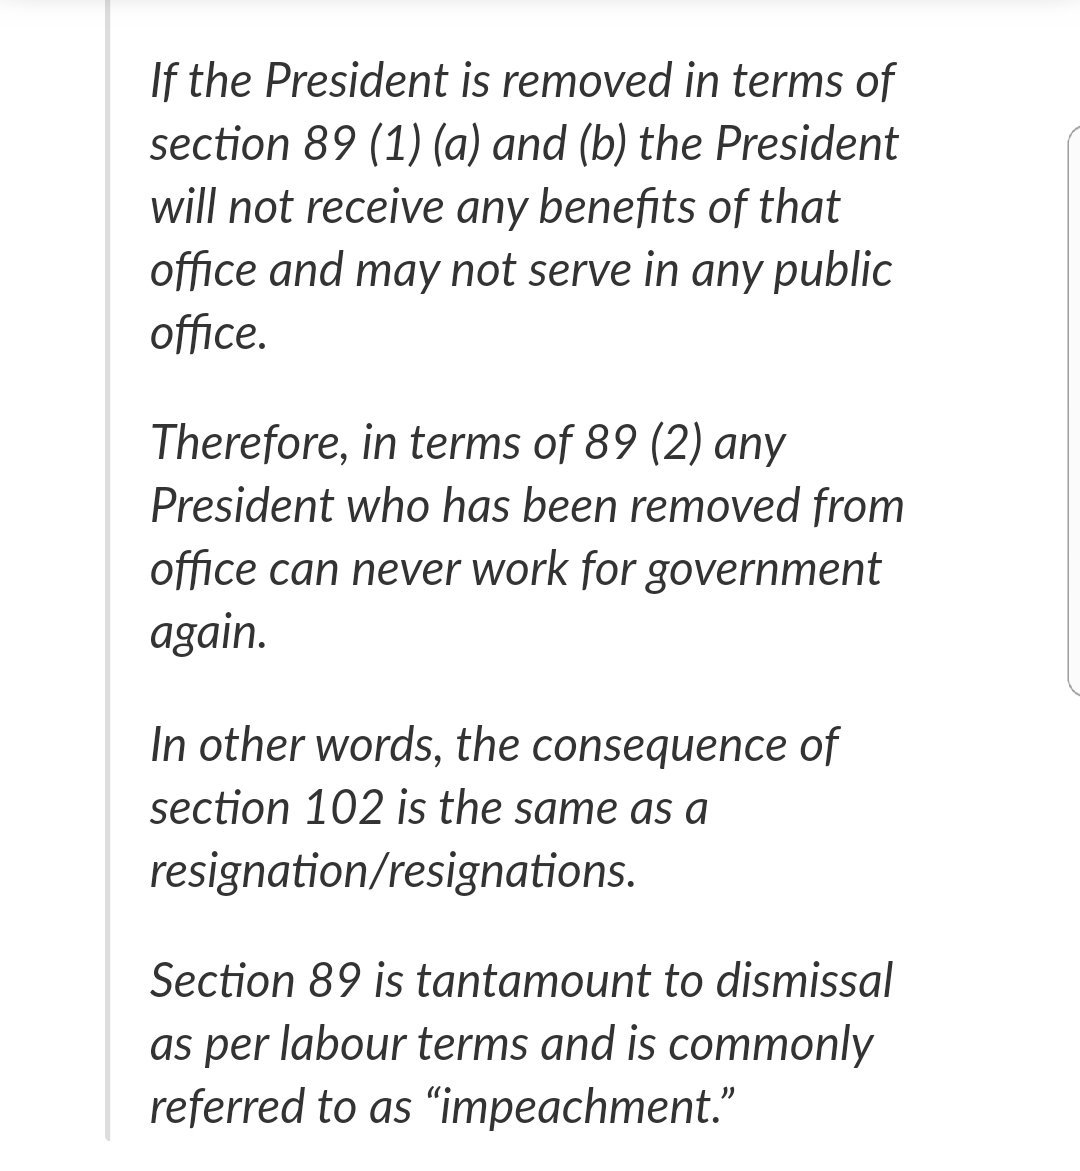 Impeachment V/S Motion of no confidence #zumabye #zuptabye #ZumaExit #ZumaRecall #ZumaMustGo #ZumaRecalled #Zumaisgone #zumalegacy #Zumahasfallen #ThefallofZuma #ANCCaucus #ANCGPAtWork #ANCNEC